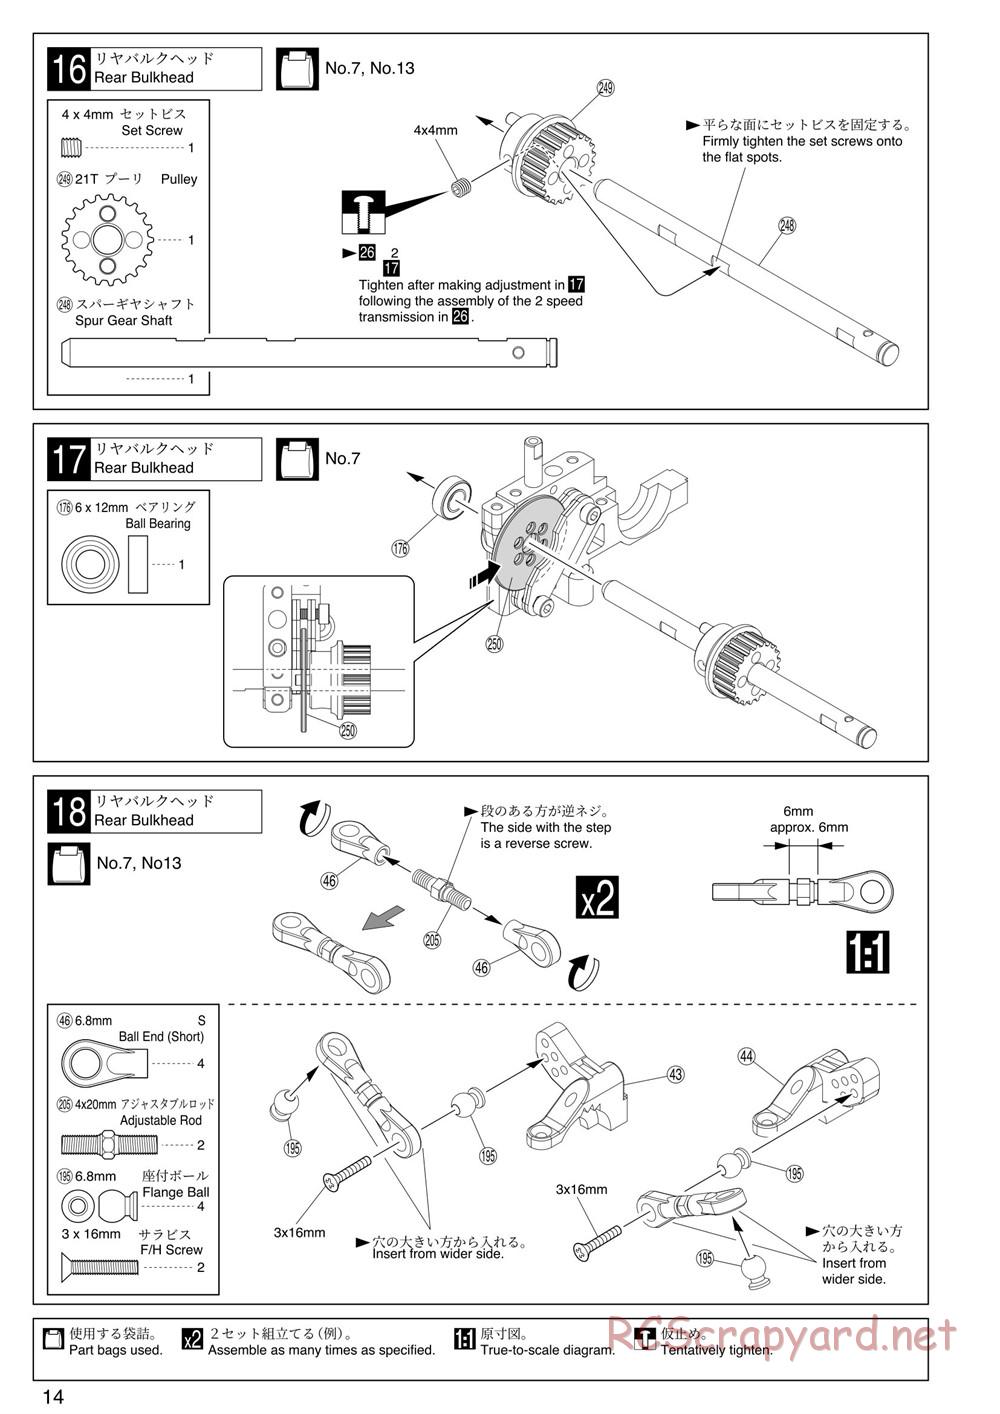 Kyosho - V-One RRR Evo - Manual - Page 14